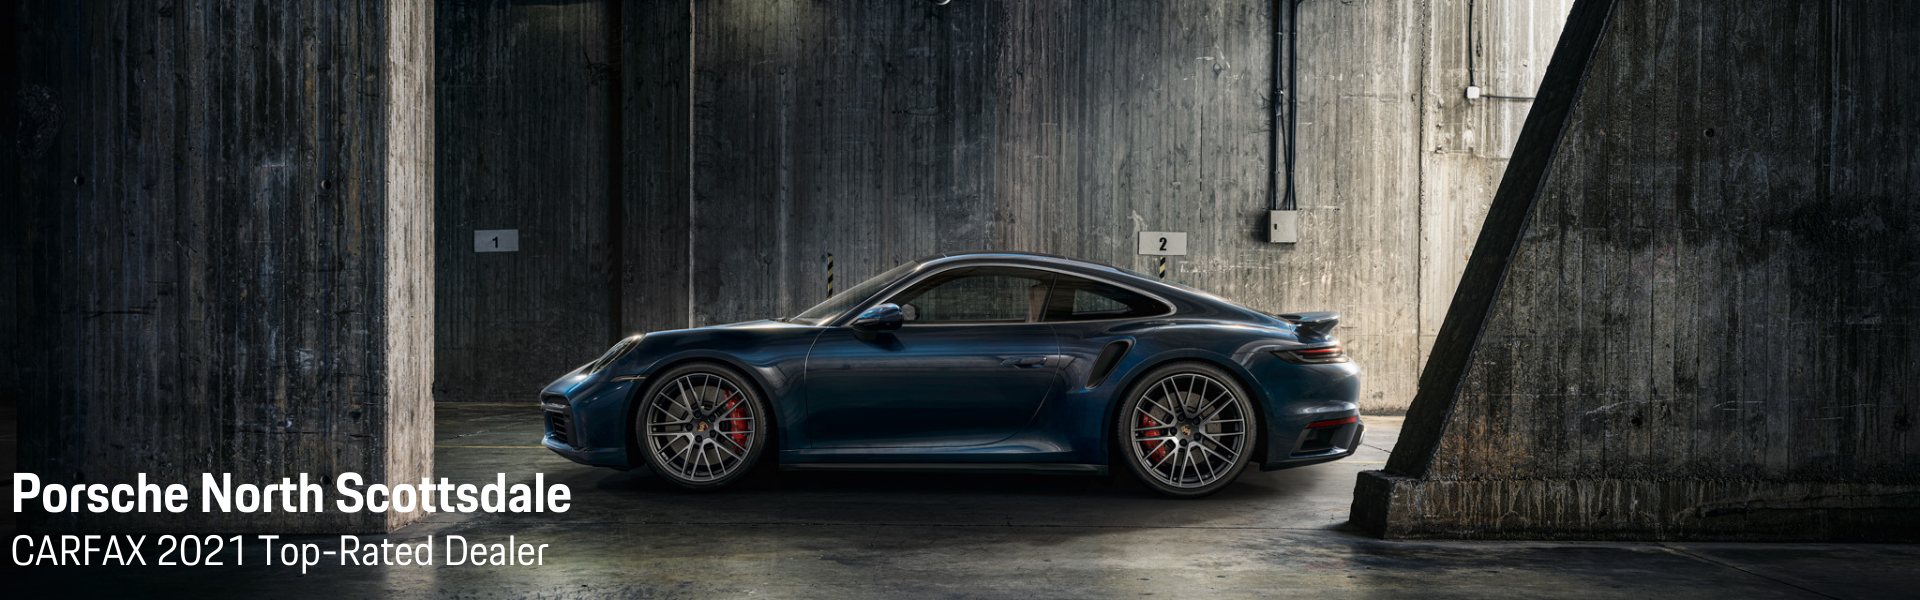 Porsche North Scottsdale - CarFax 2021 Top-Rated Dealer